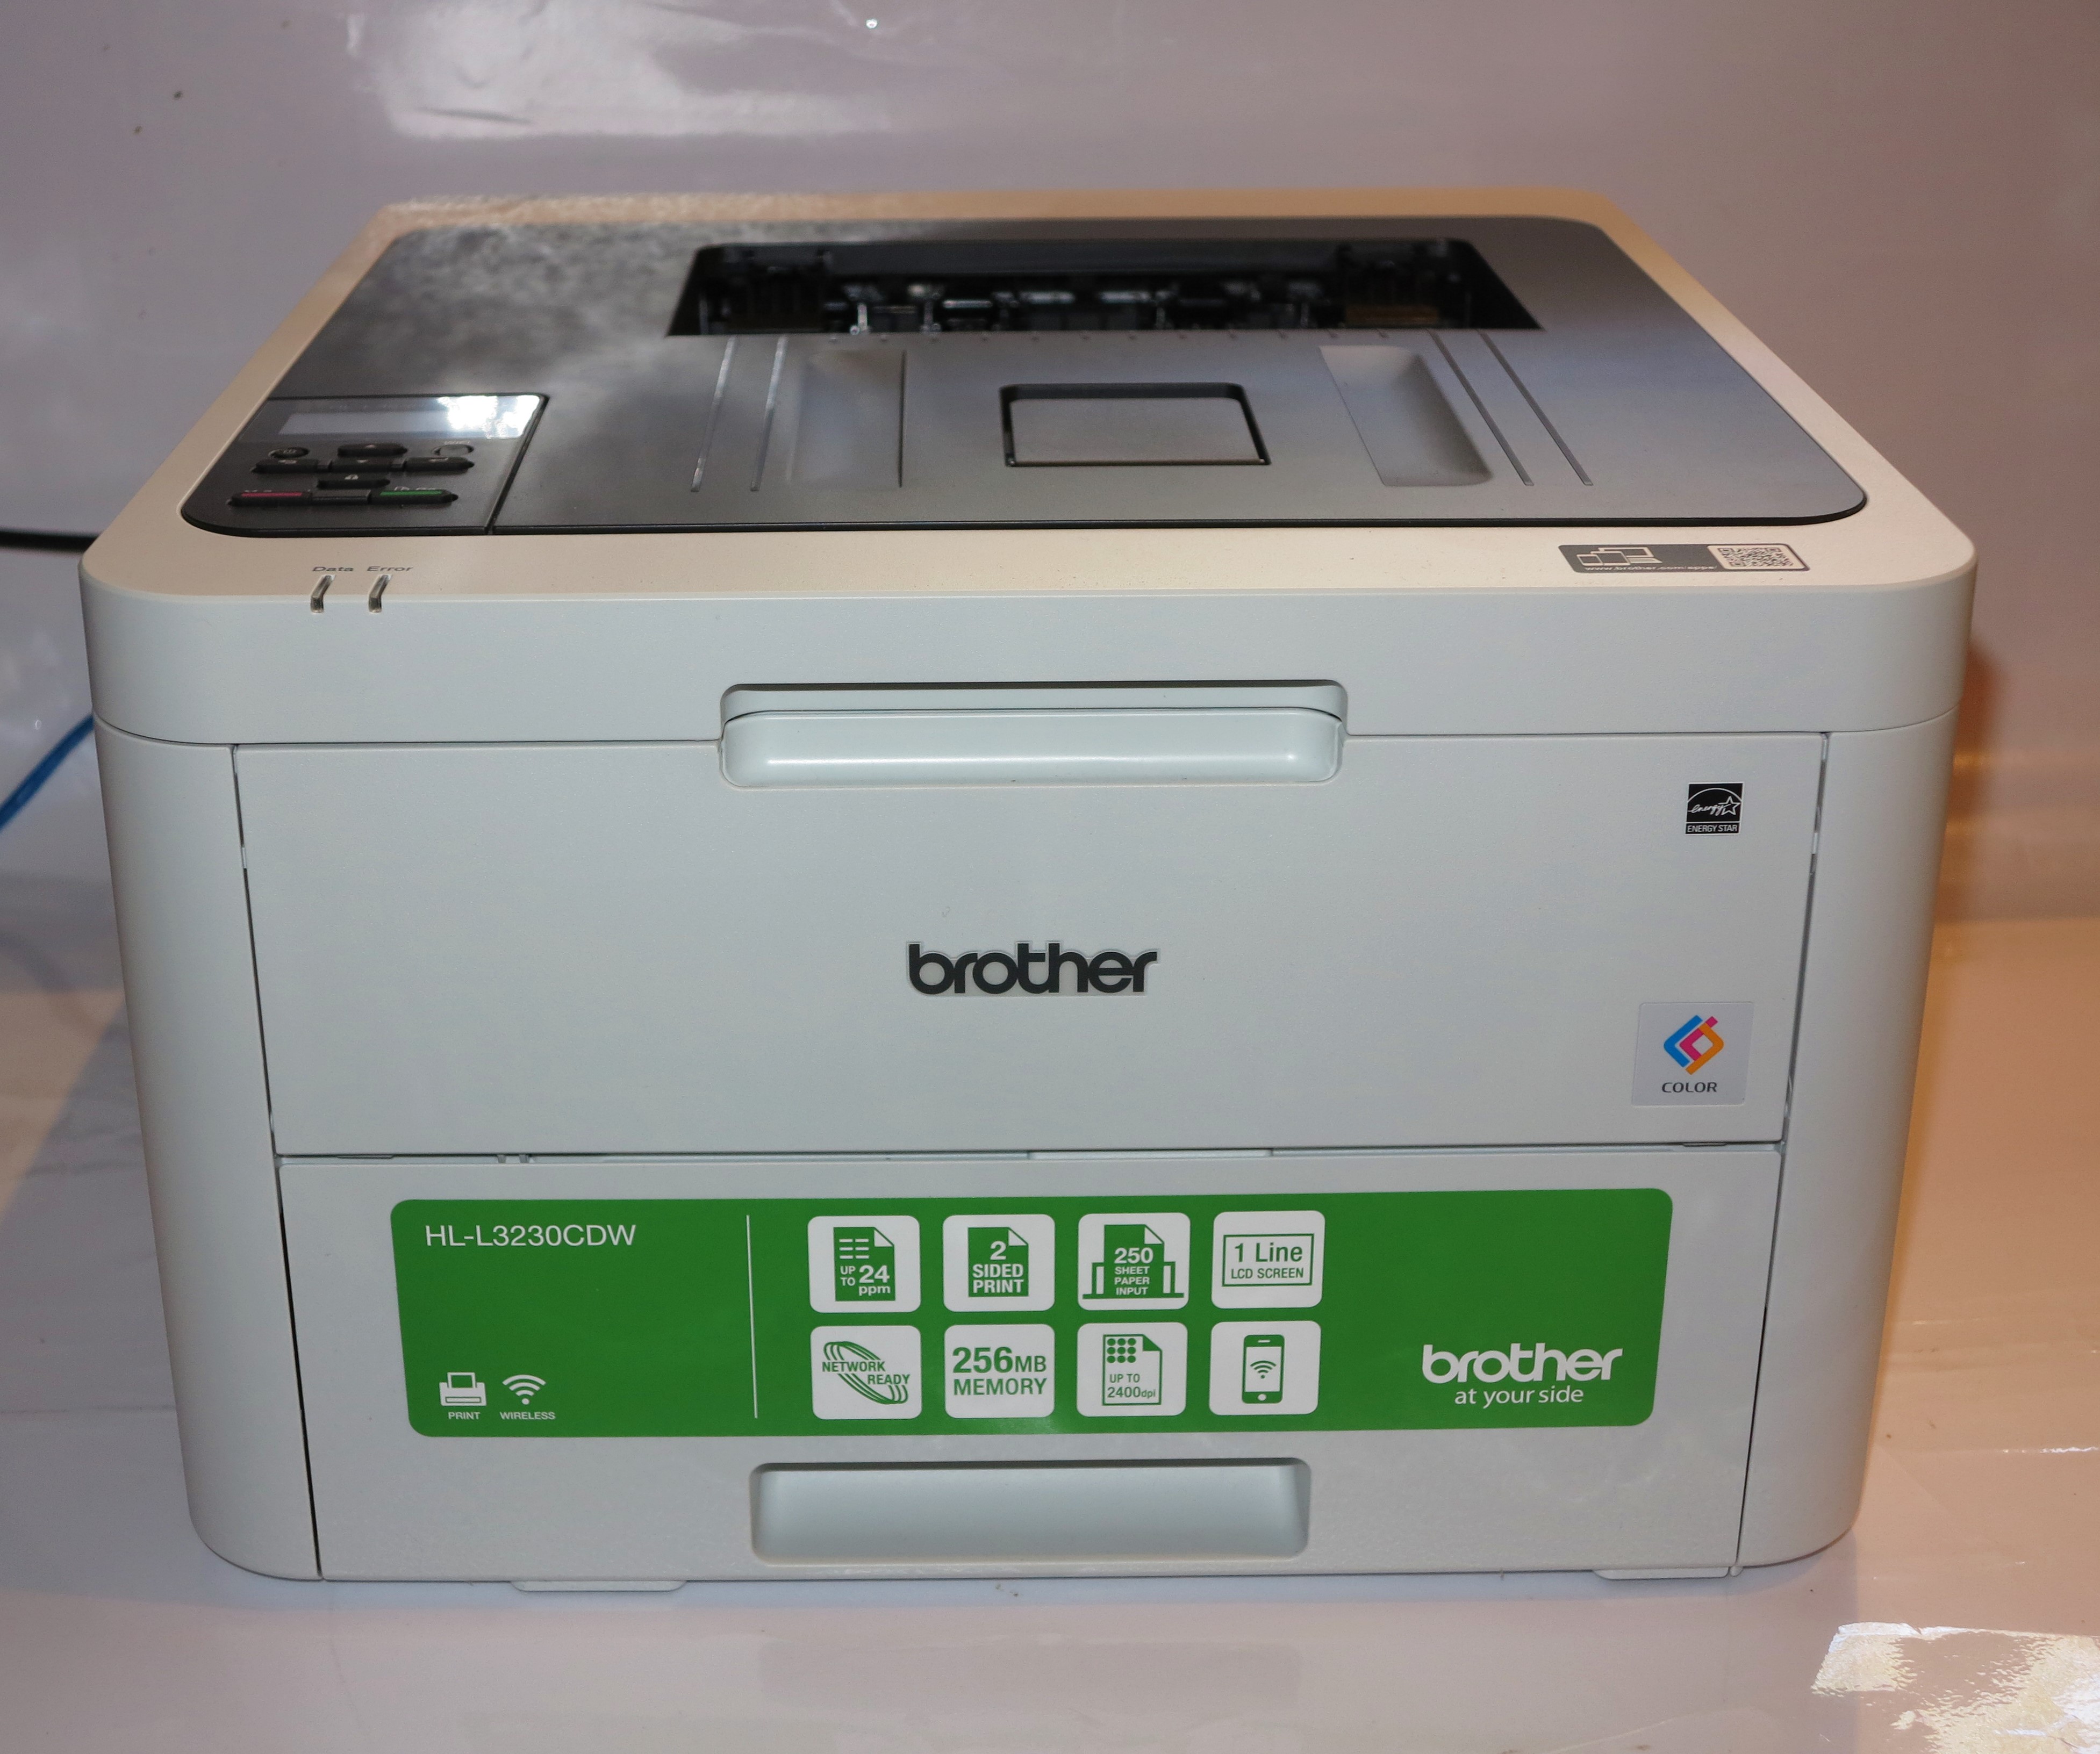 Brother HL-L3230CDW colour LED printer